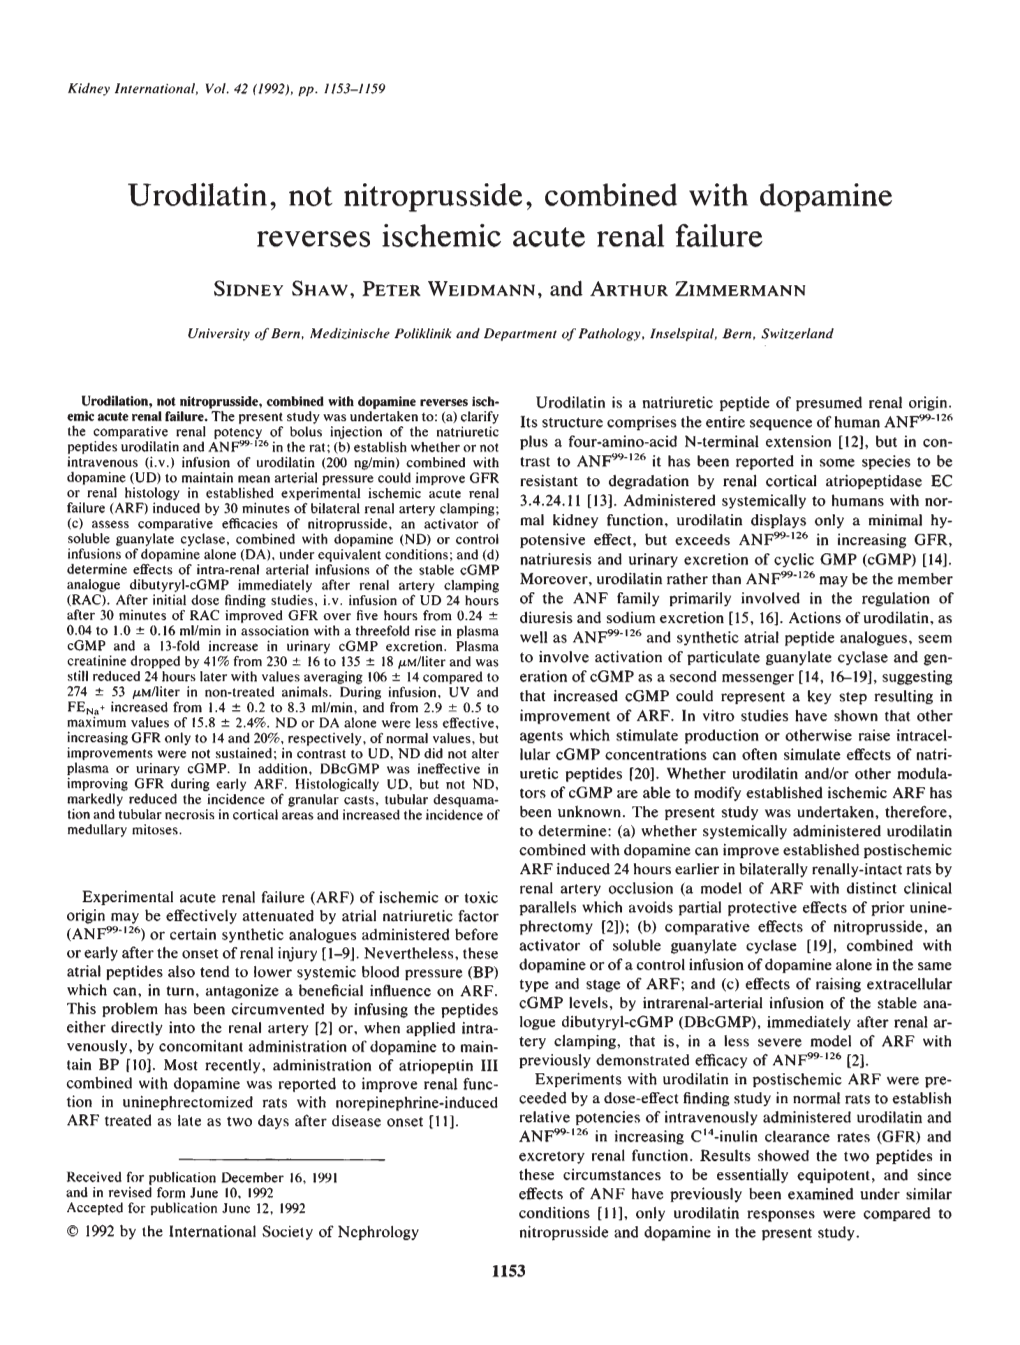 Urodilatin, Not Nitroprusside, Combined with Dopamine Reverses Ischemic Acute Renal Failure